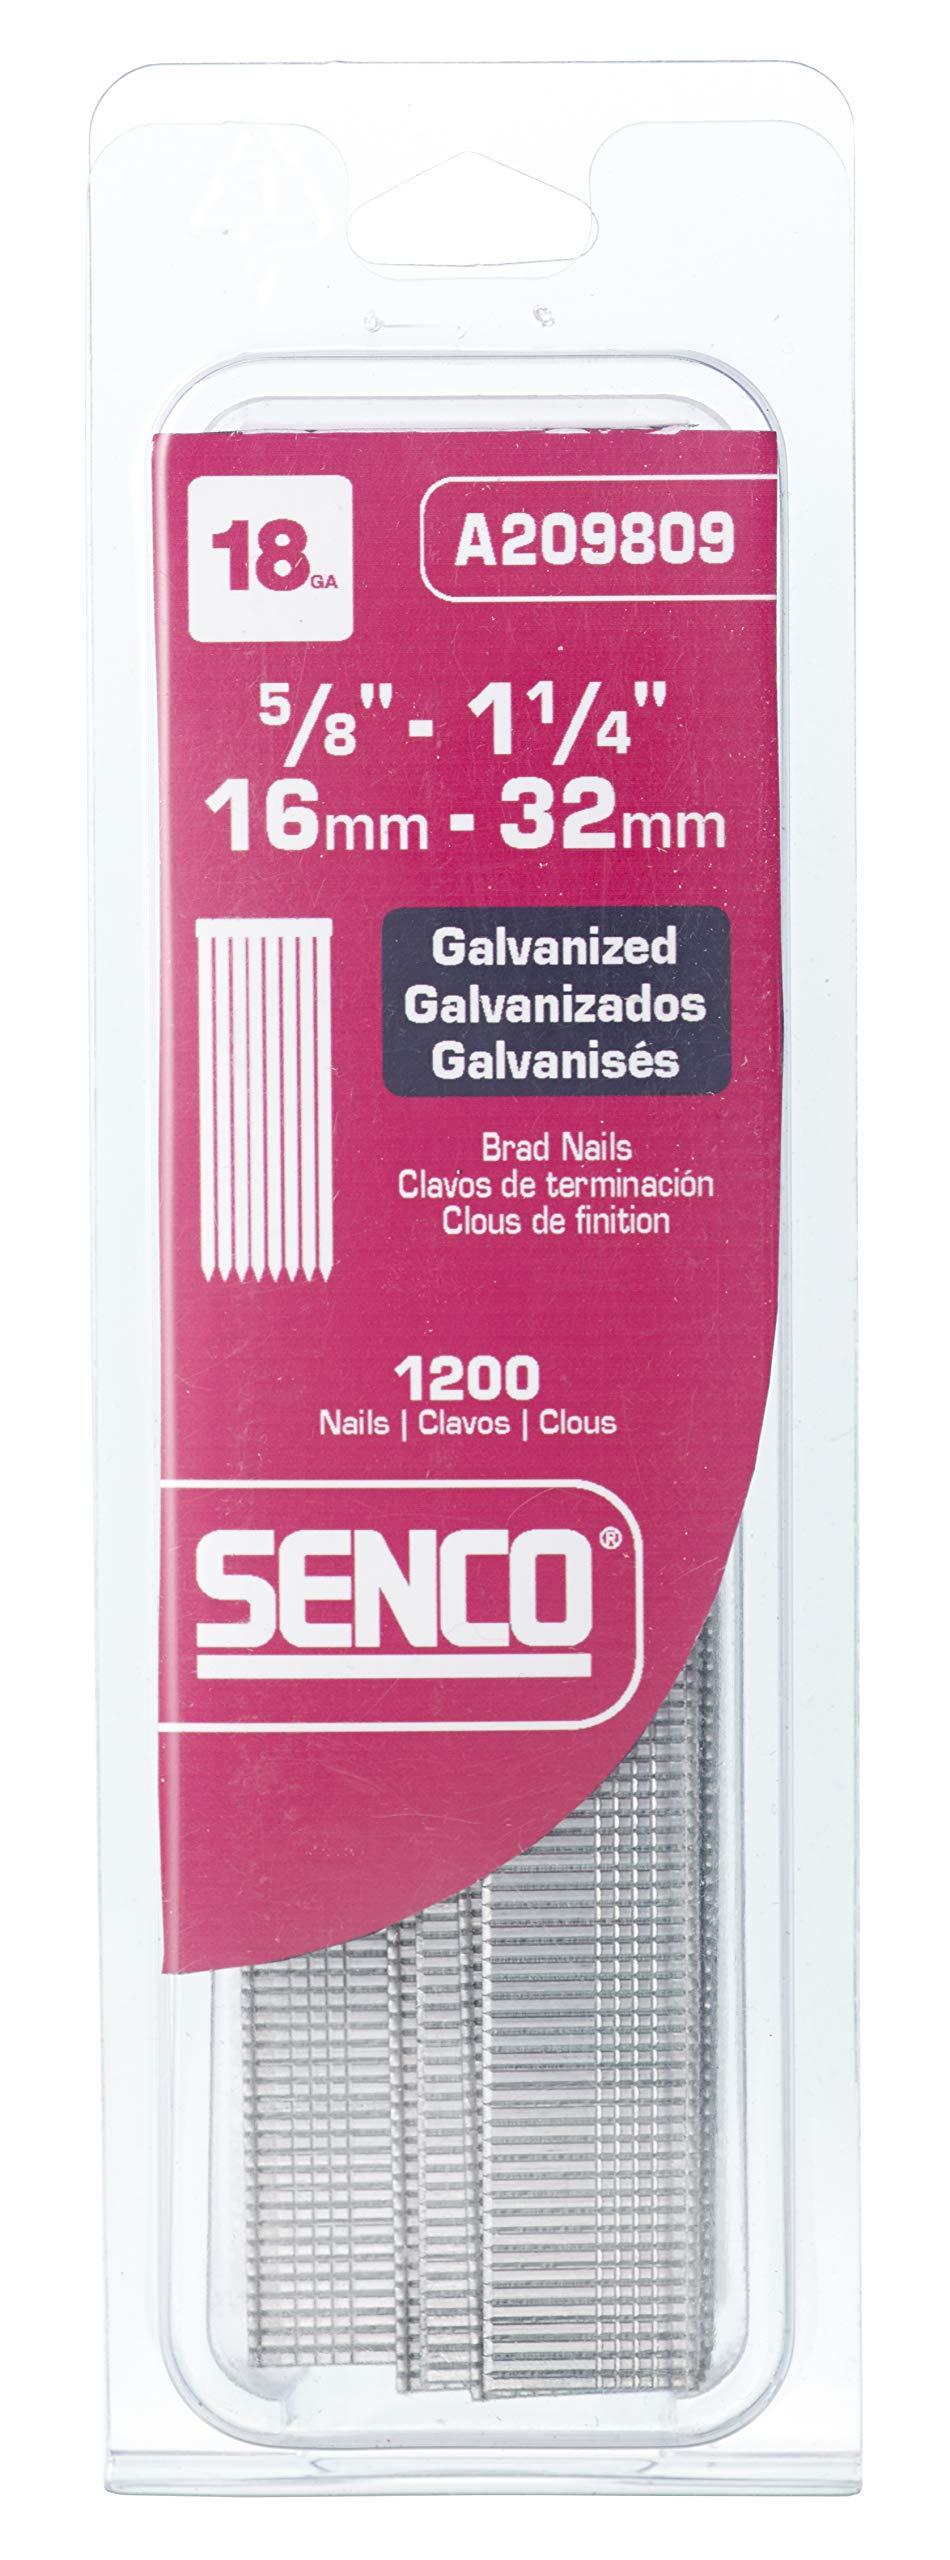 Senco A209809 18-Gauge-by-5/8-Inch to 1-1/4-Inch Electro Galvanized Variety Pack Brads - NewNest Australia